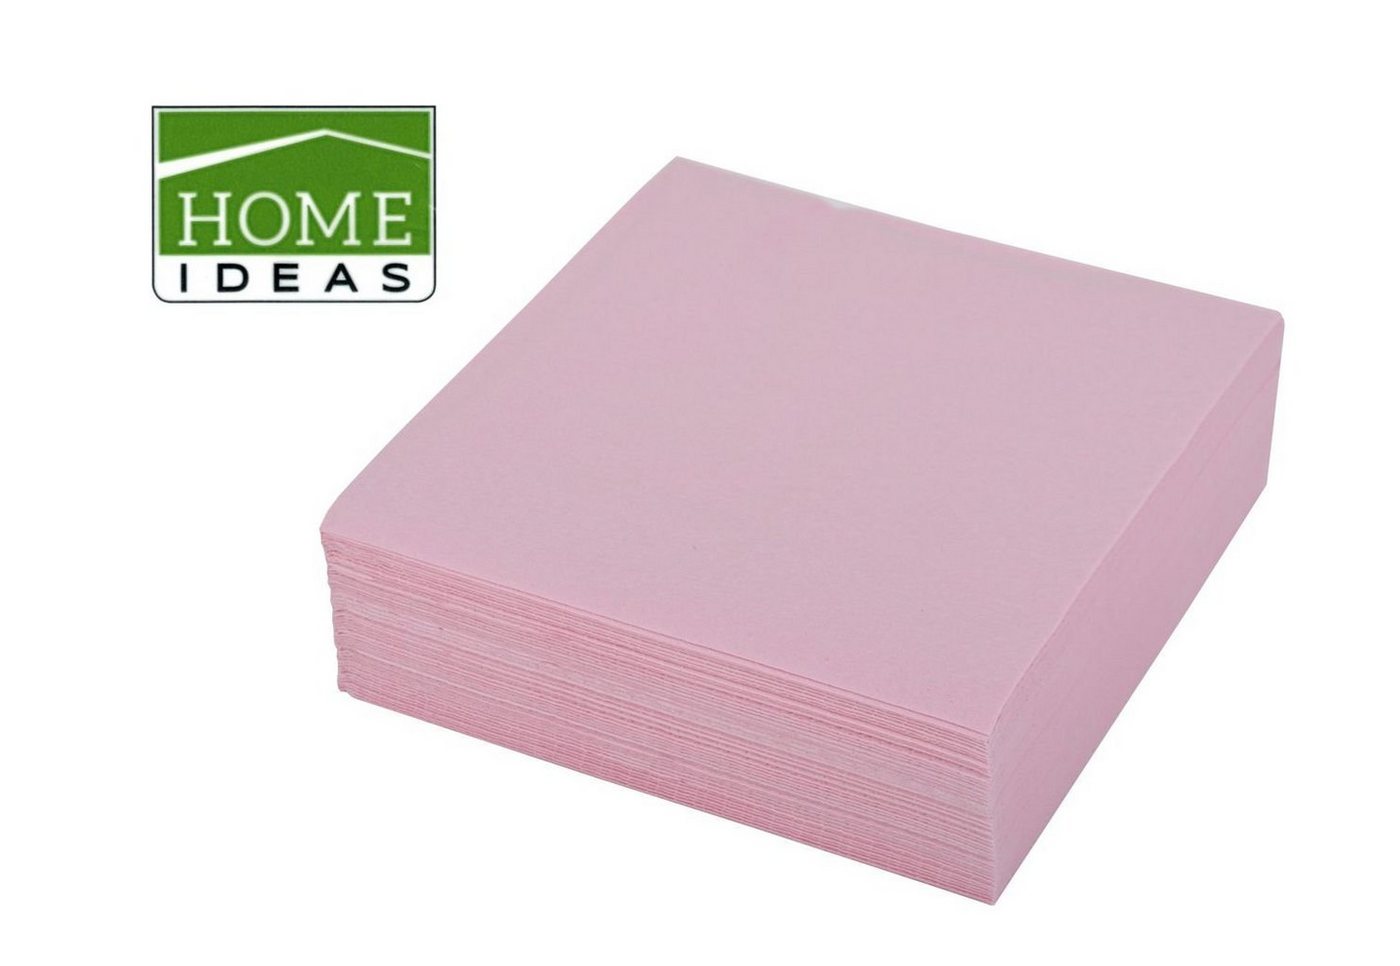 Home Ideas Papierserviette 2500 Servietten grün 33x33cm 3-lagig 1/4 Falz Papierserviette Papiertu von Home Ideas